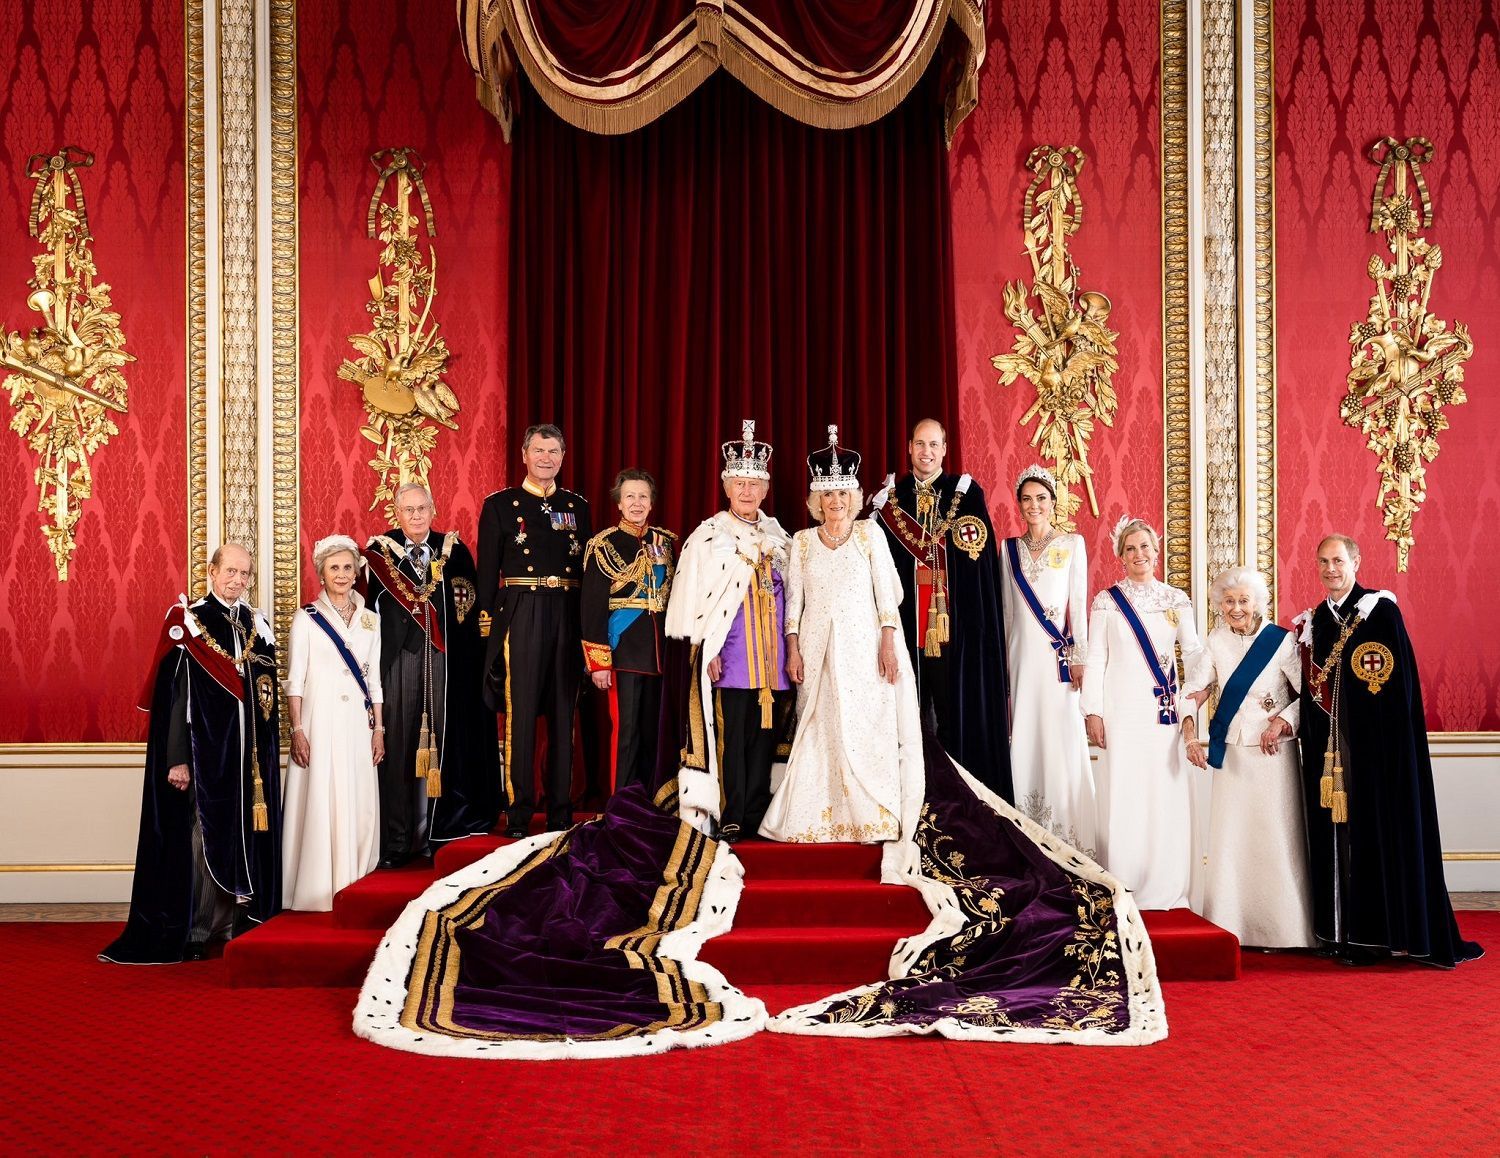 Coronation of King Charles 